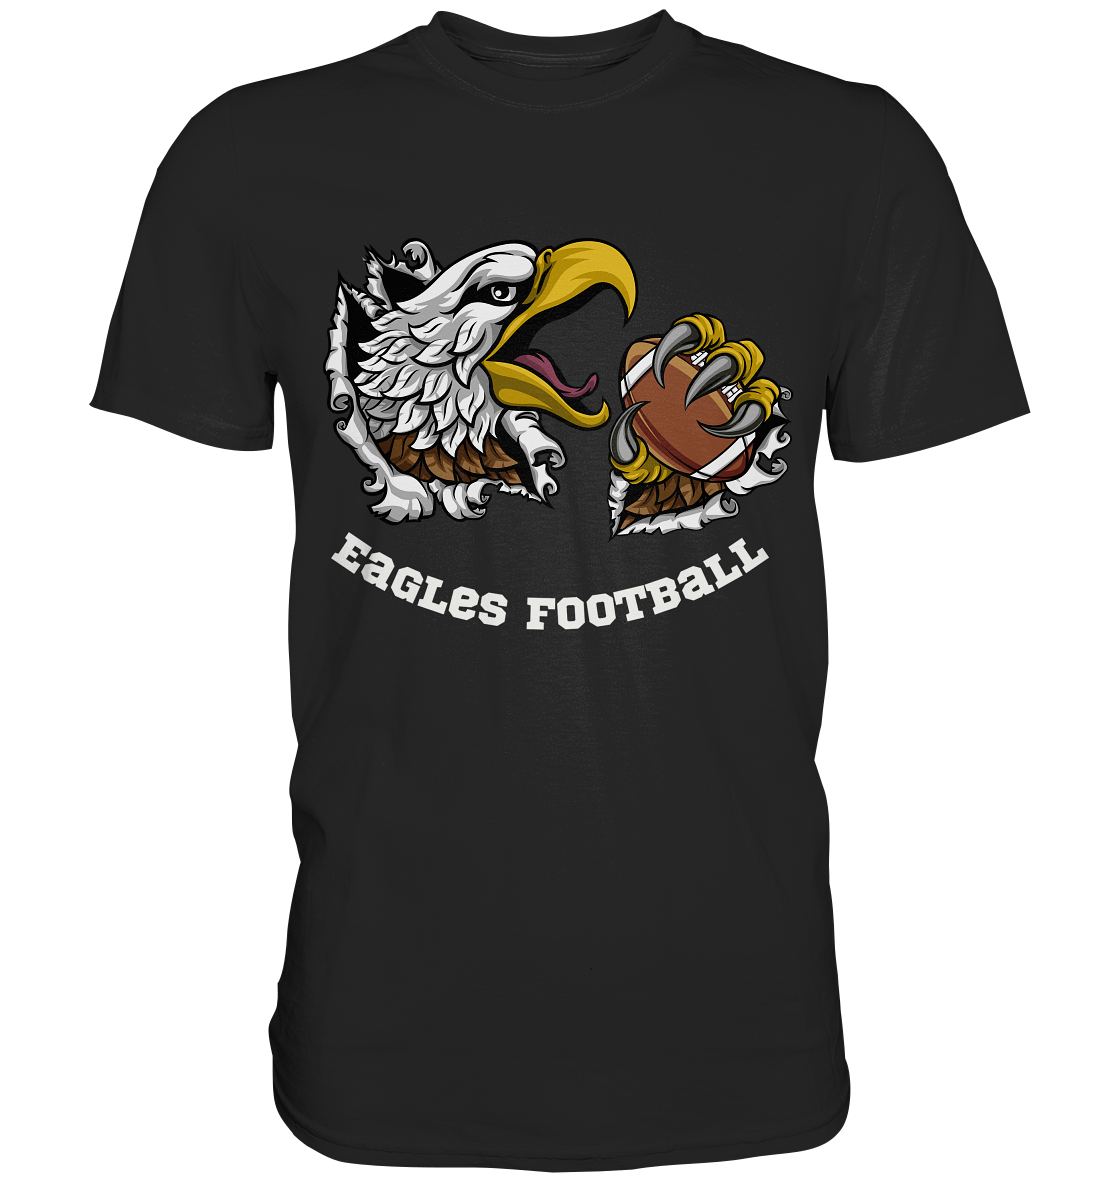 Eagles Football - Premium Shirt - Football Unity Football Unity